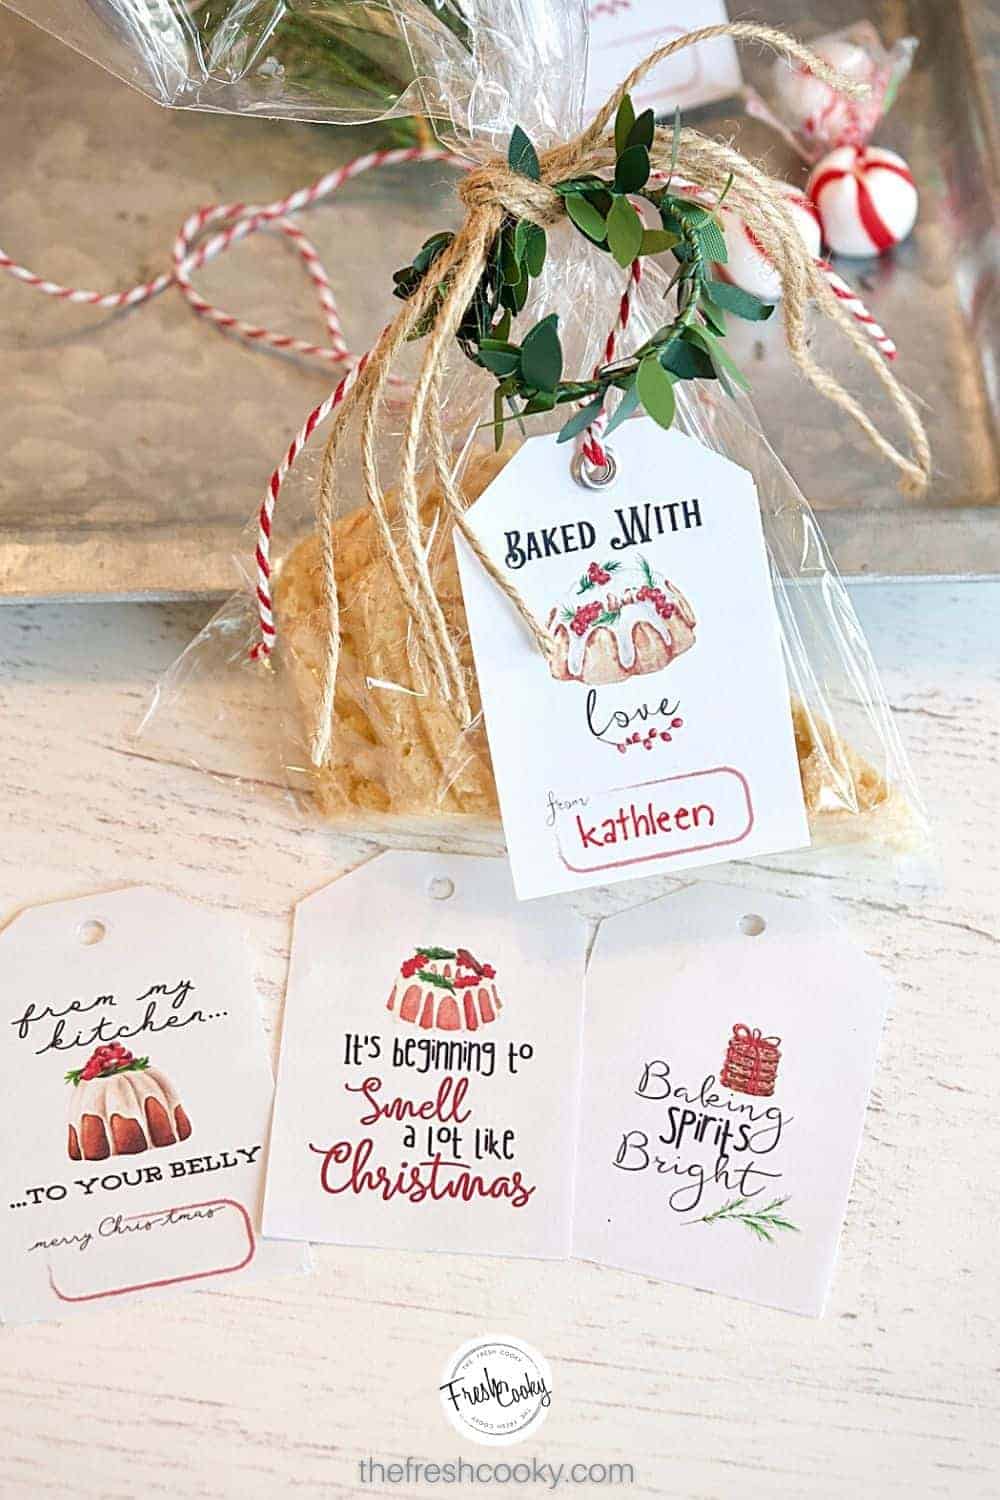 Fun and Creative Neighbor Christmas Gift Ideas with FREE Printable